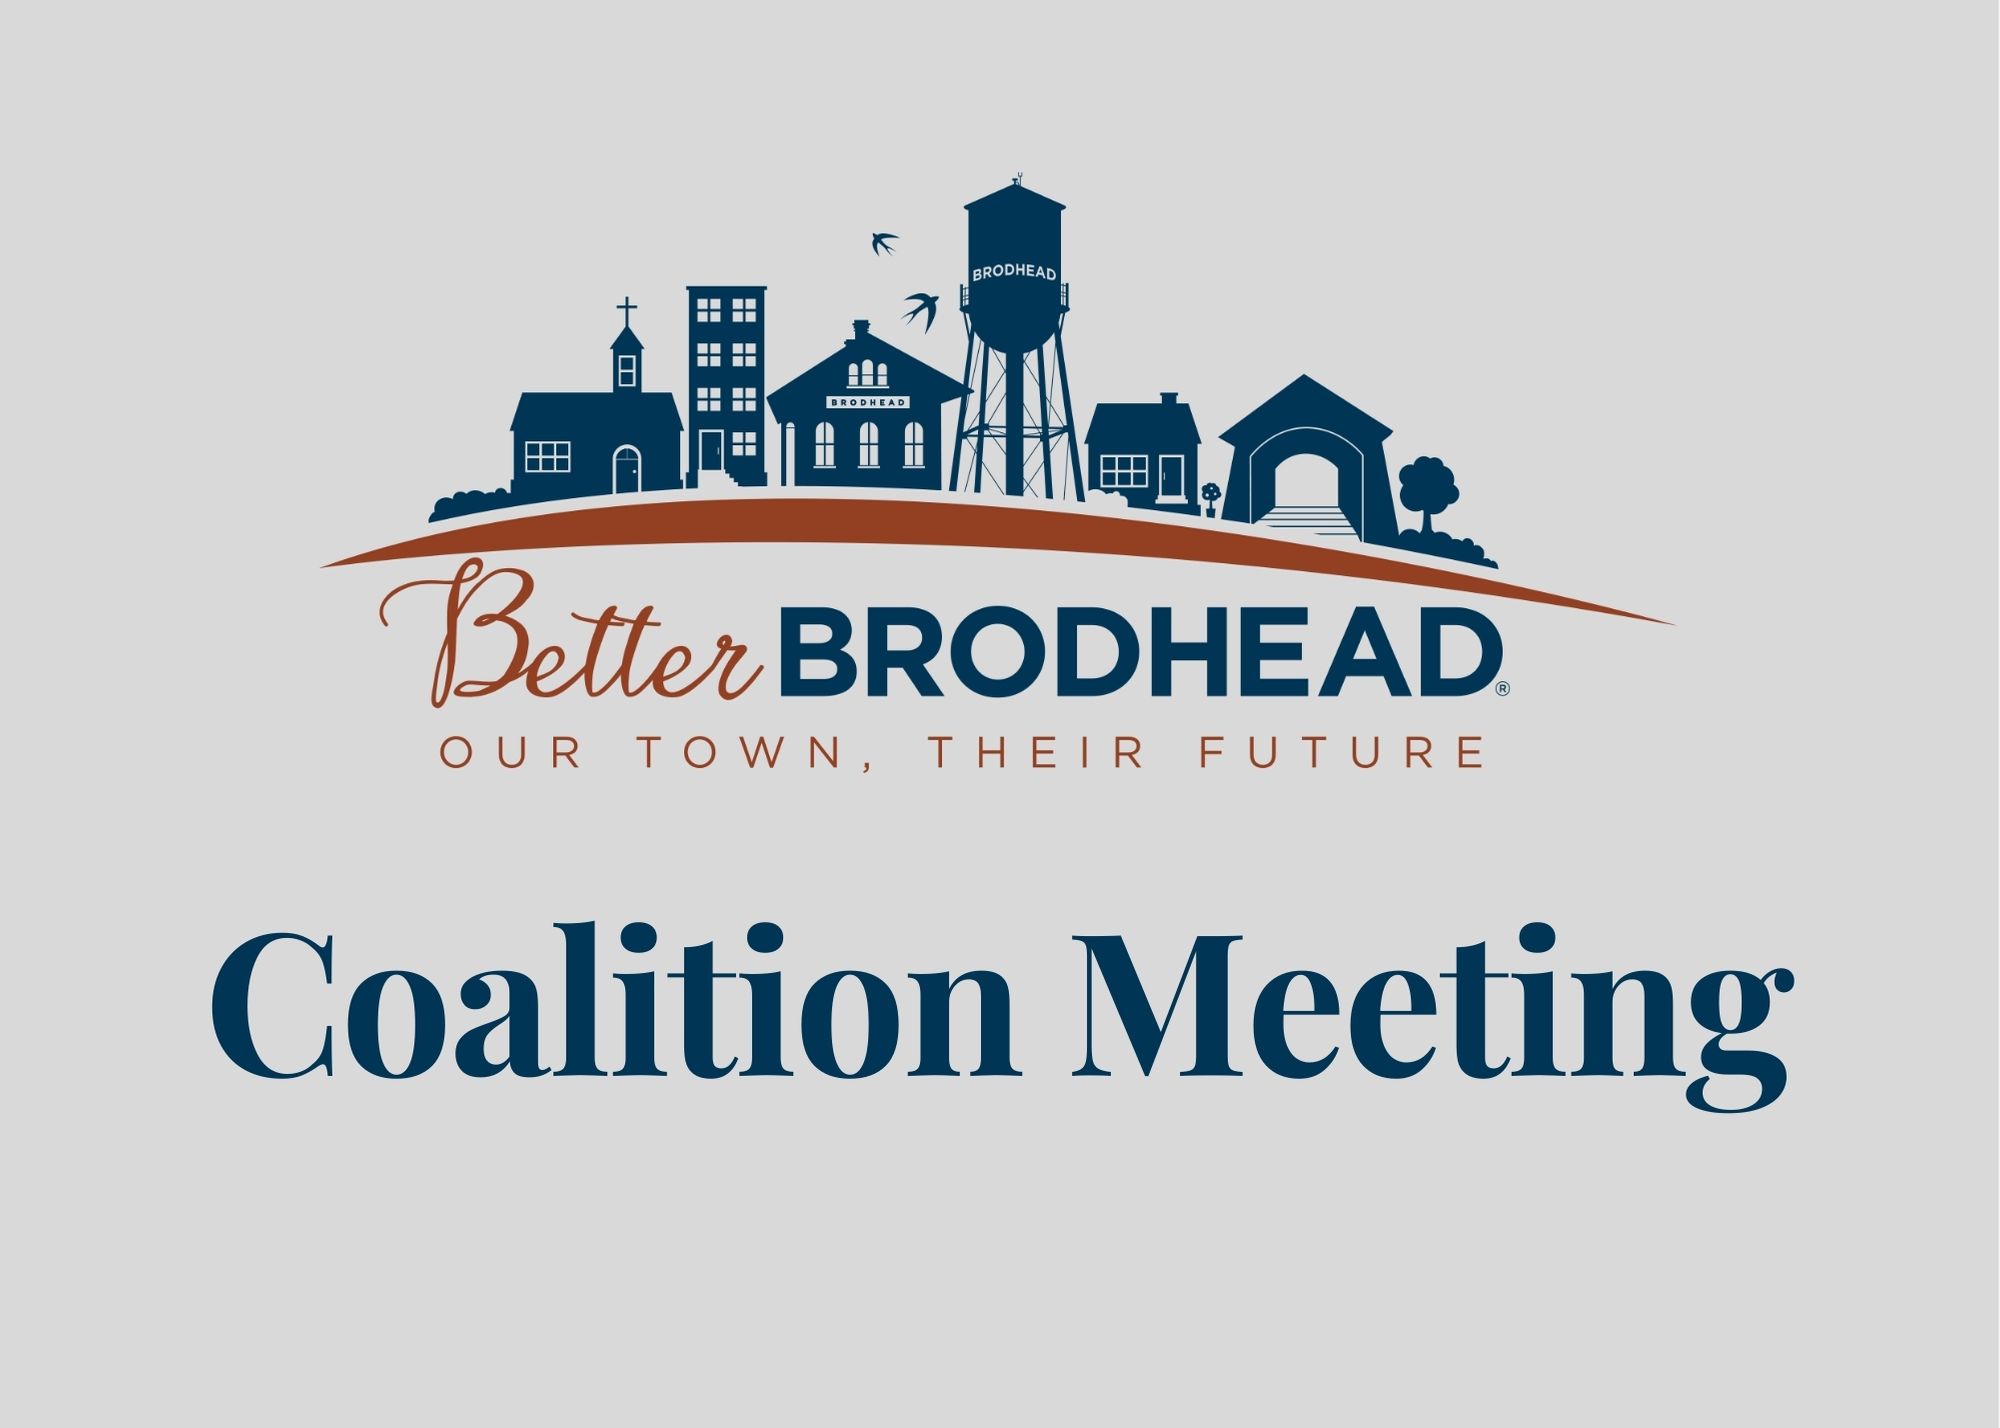 Coalition Meeting Photo